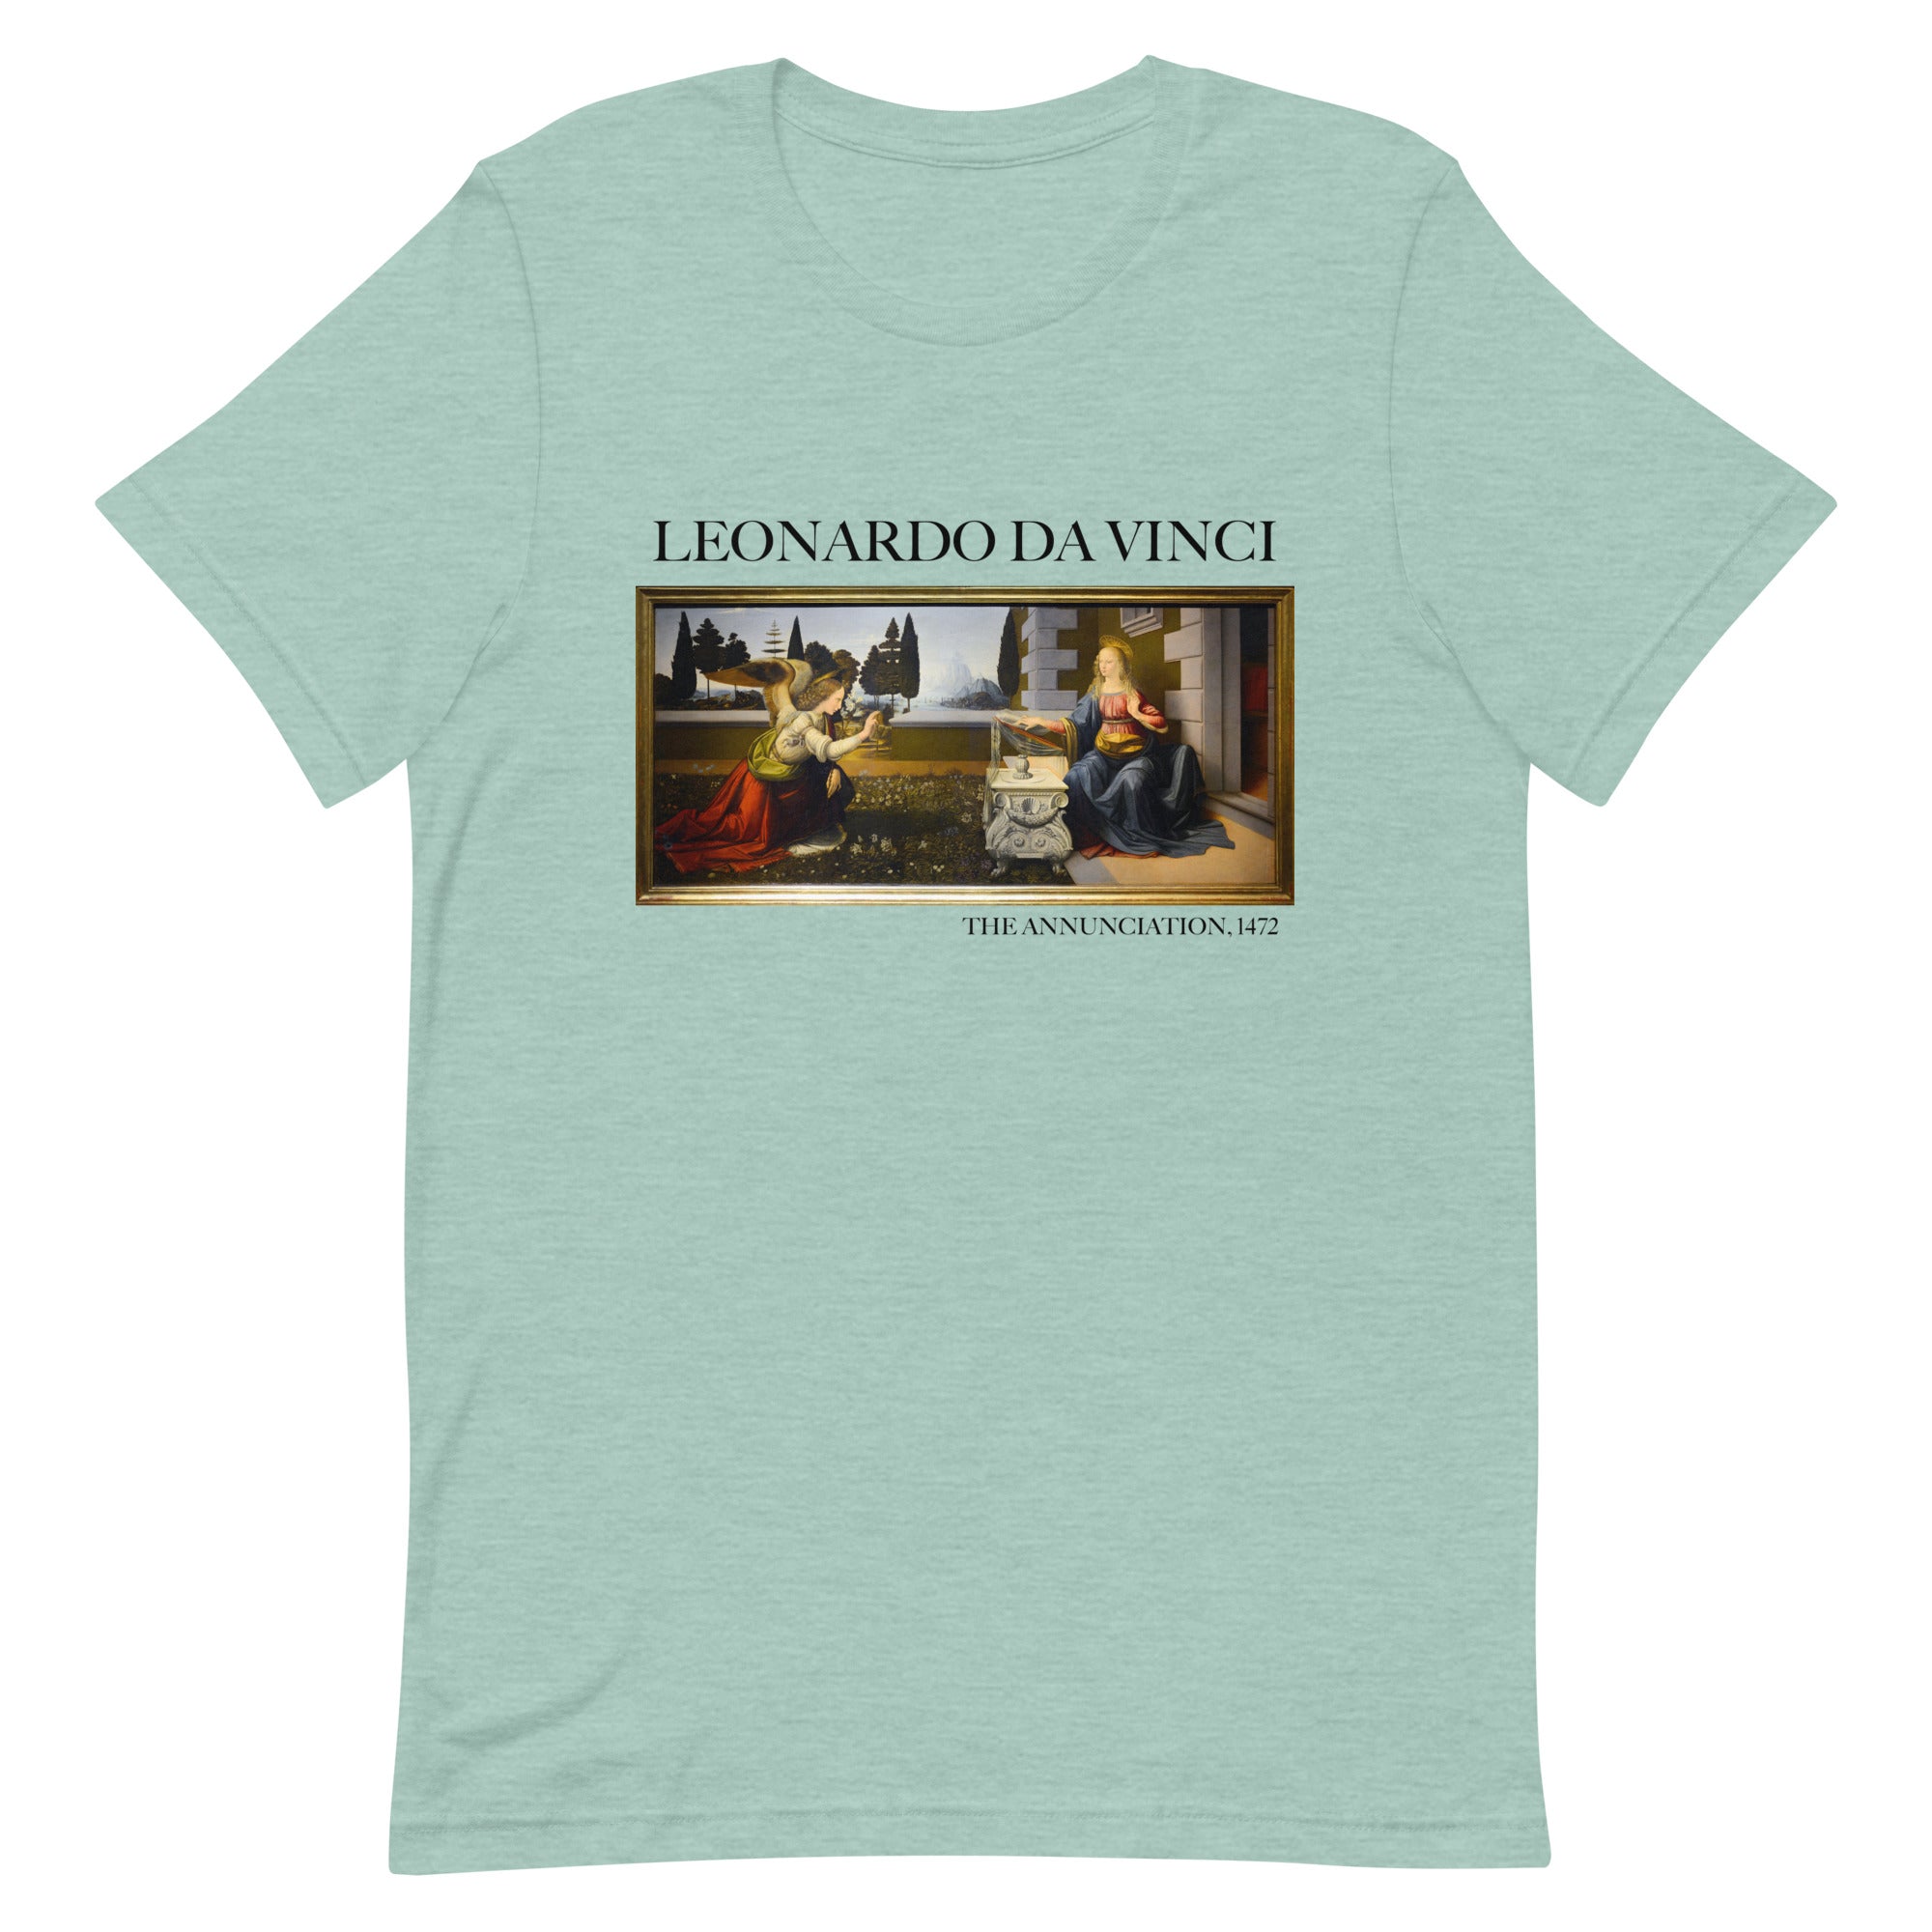 Leonardo da Vinci 'The Annunciation' Famous Painting T-Shirt | Unisex Classic Art Tee